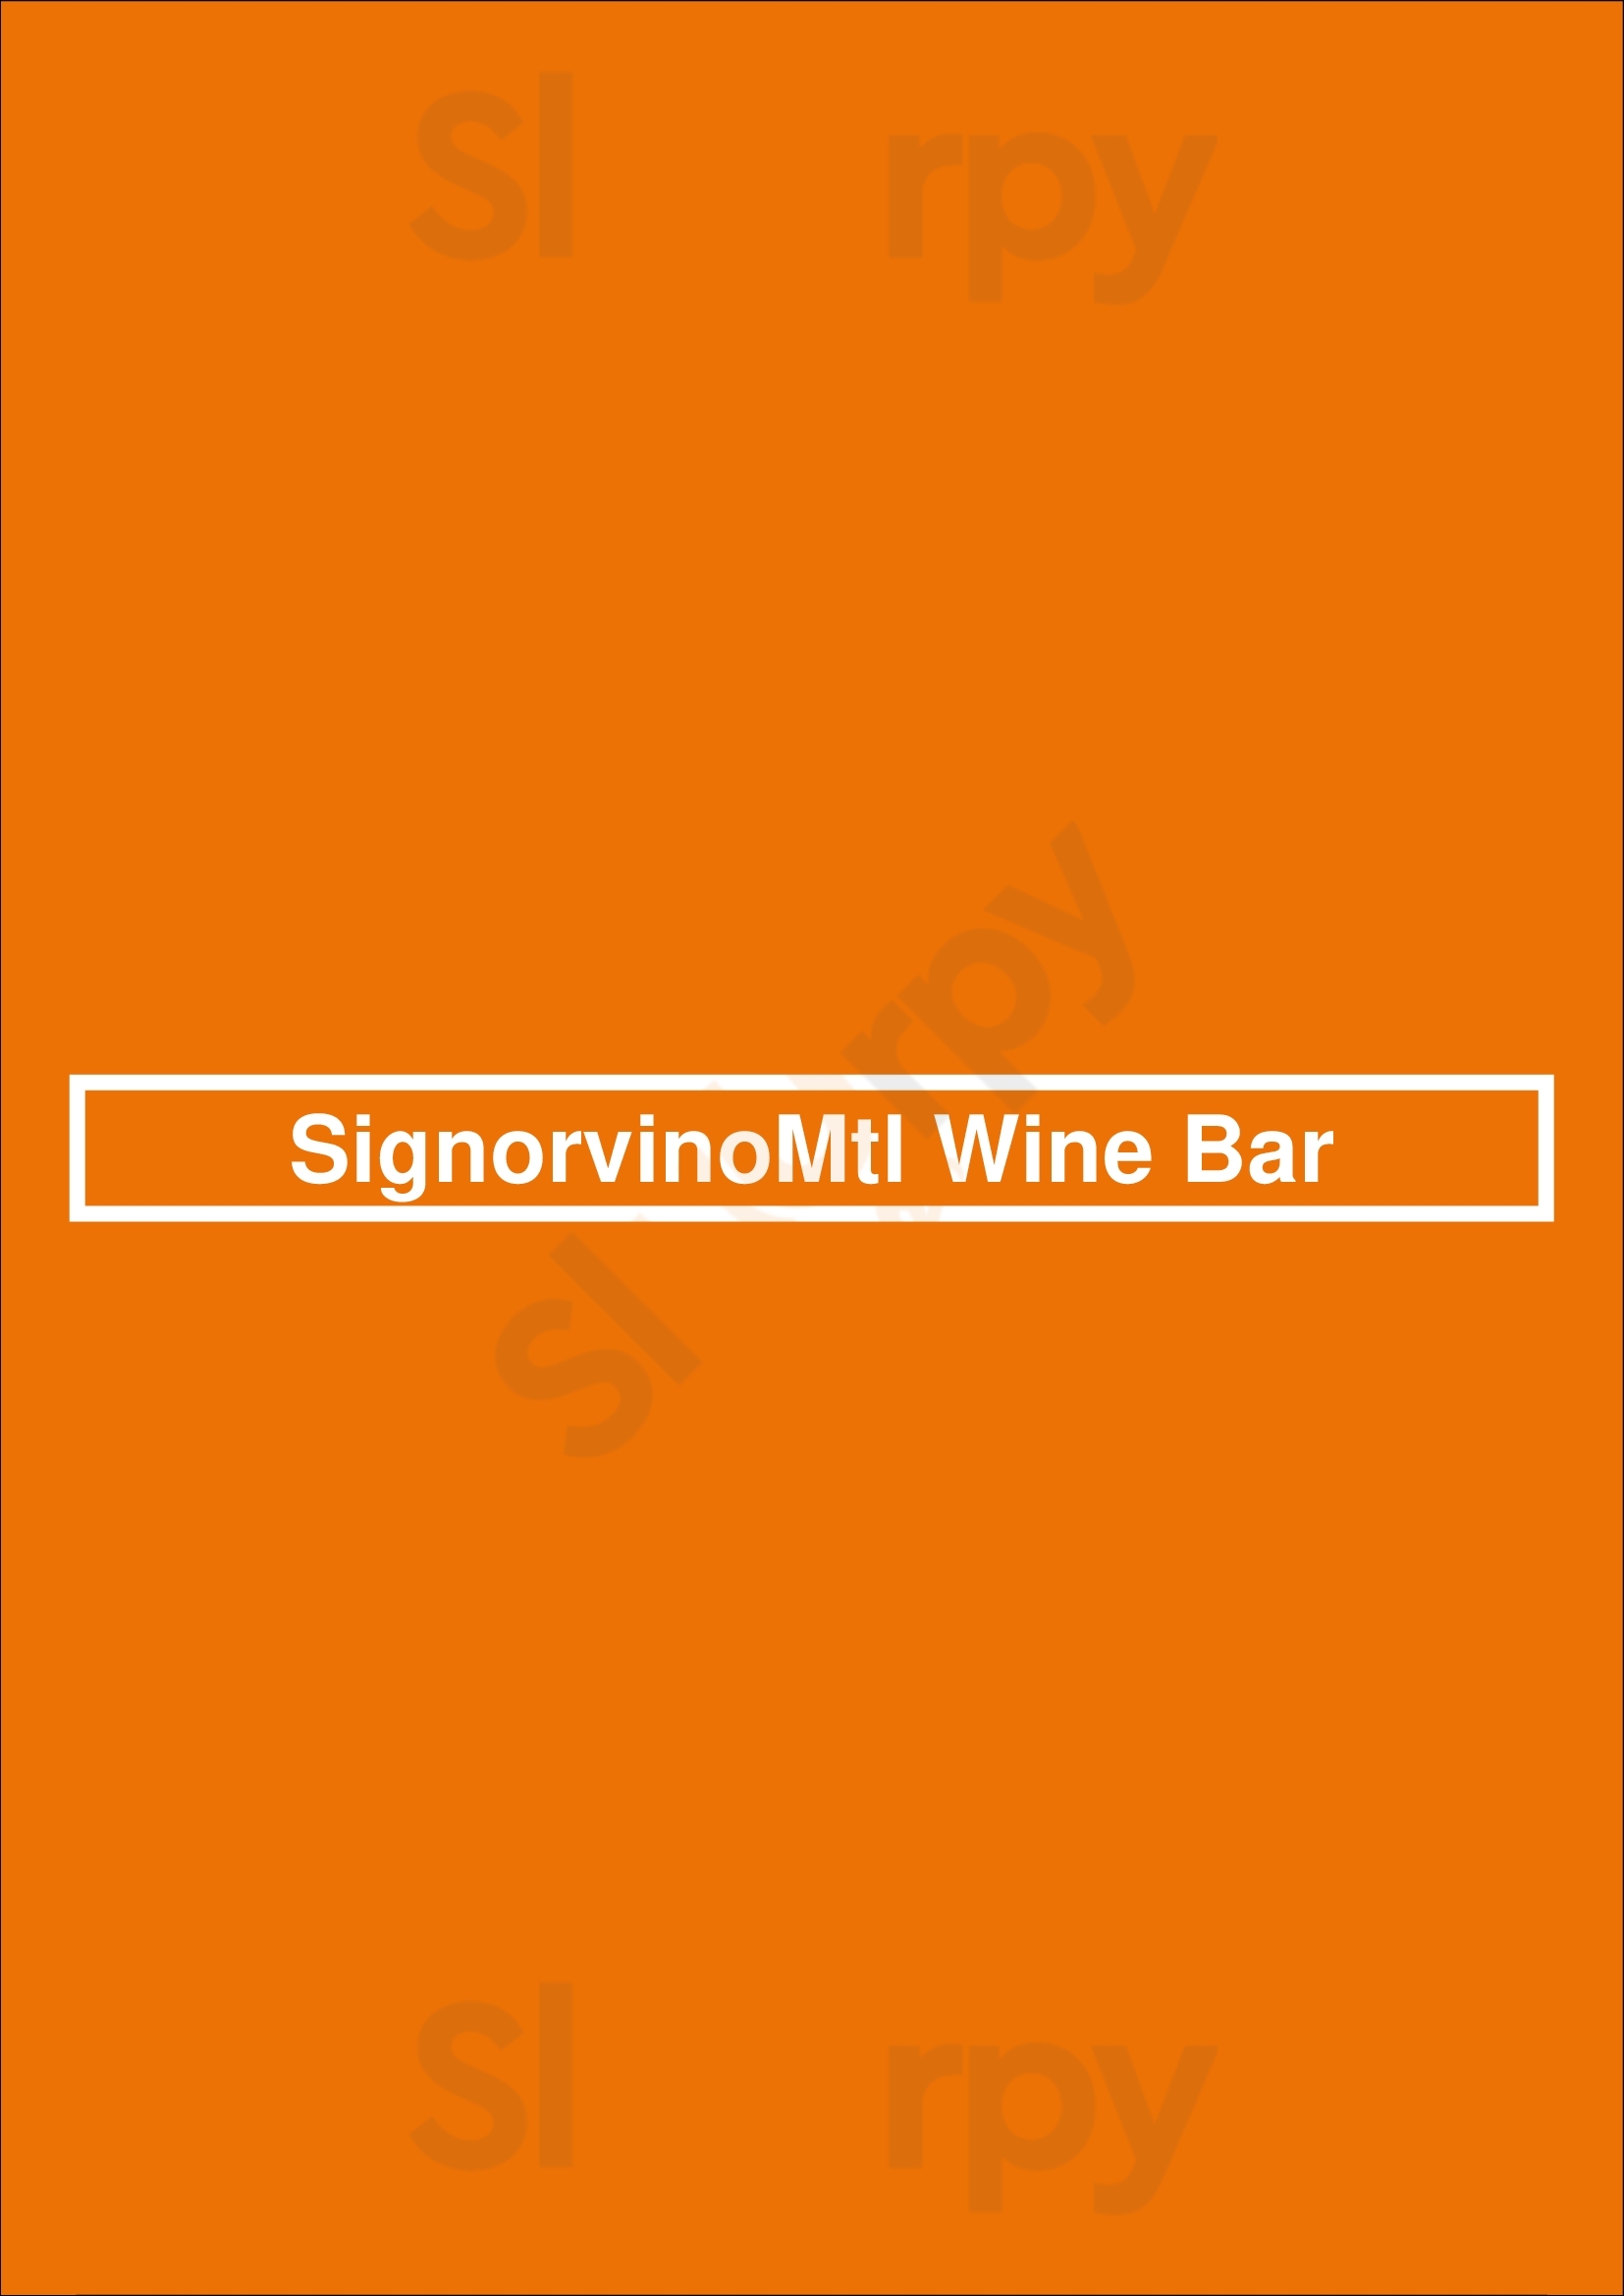 Signorvinomtl Wine Bar Montreal Menu - 1